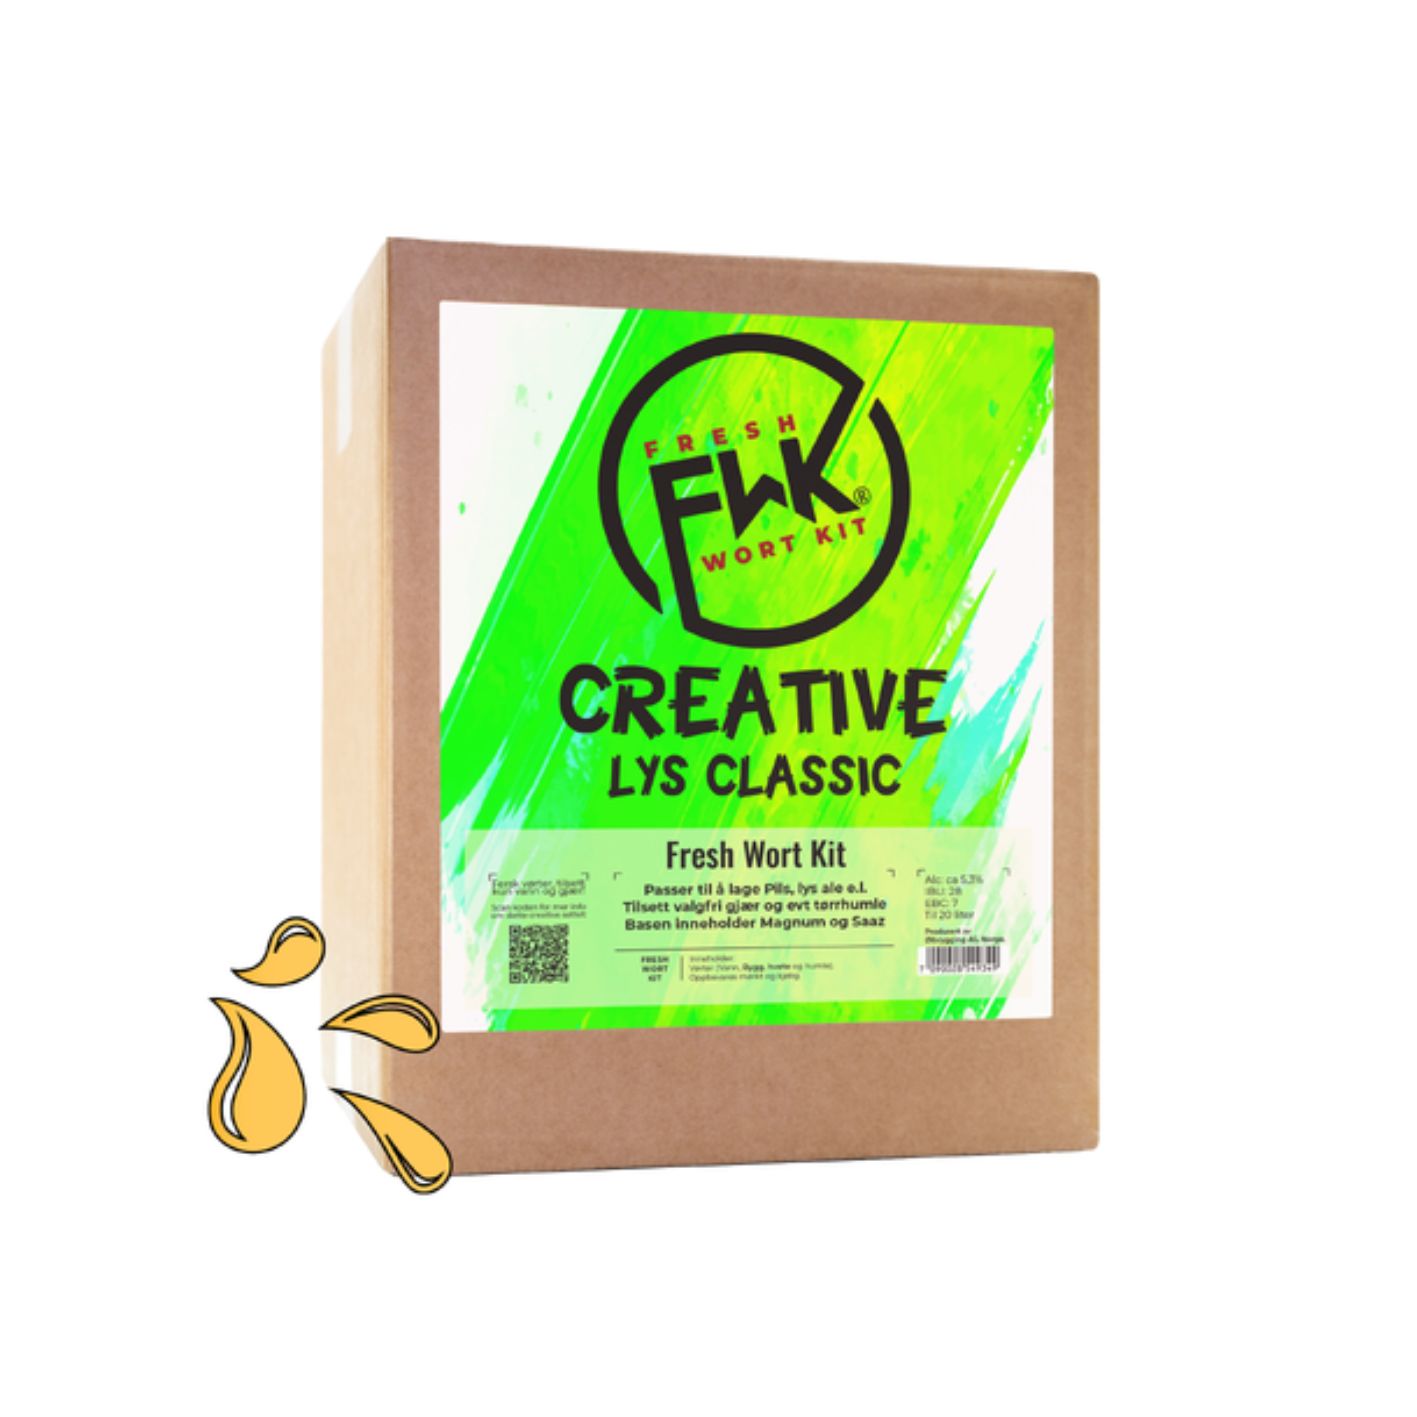 FWK Creative Lys Classic